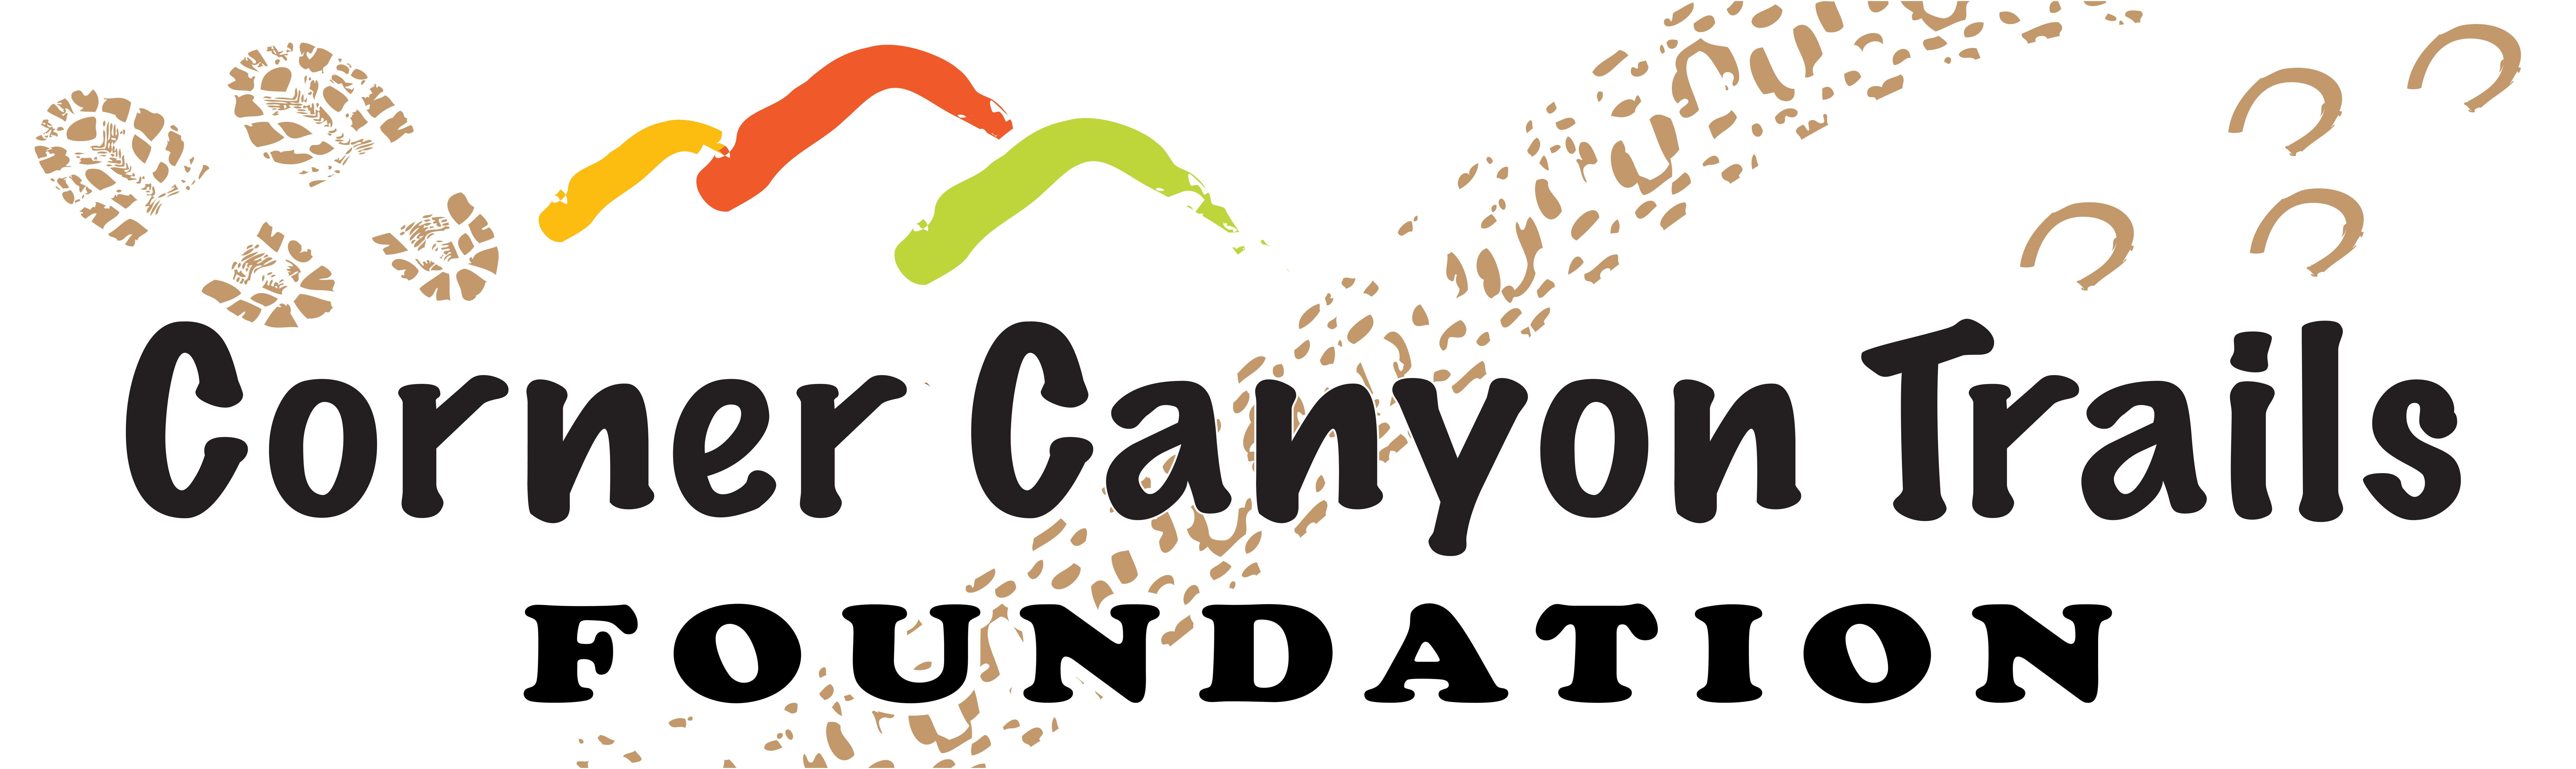 Corner Canyon Trails Foundation